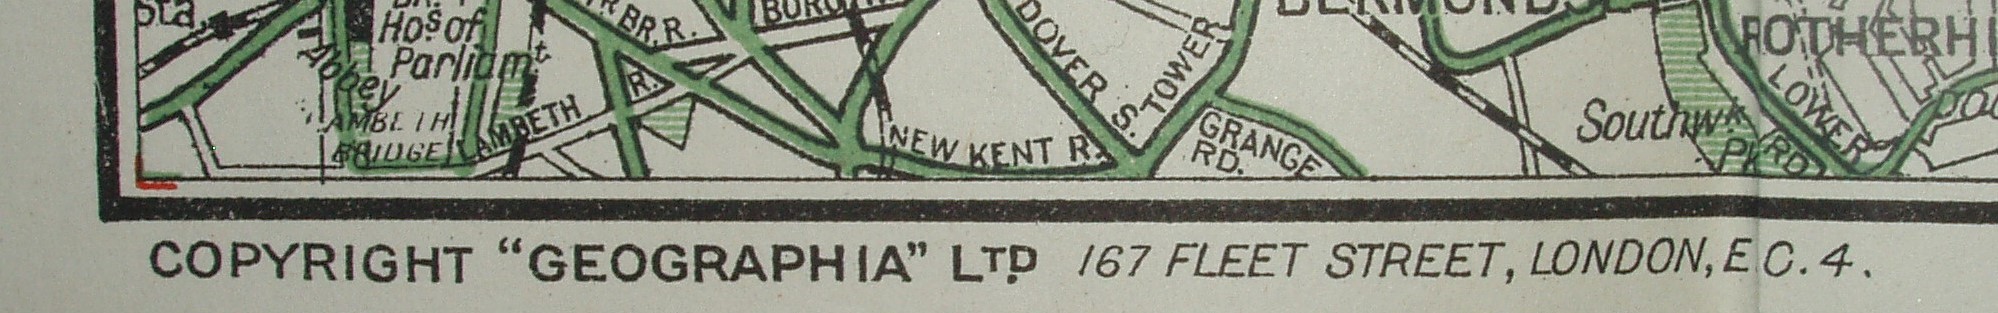 Geographia Ramblers Map, 1942 second address